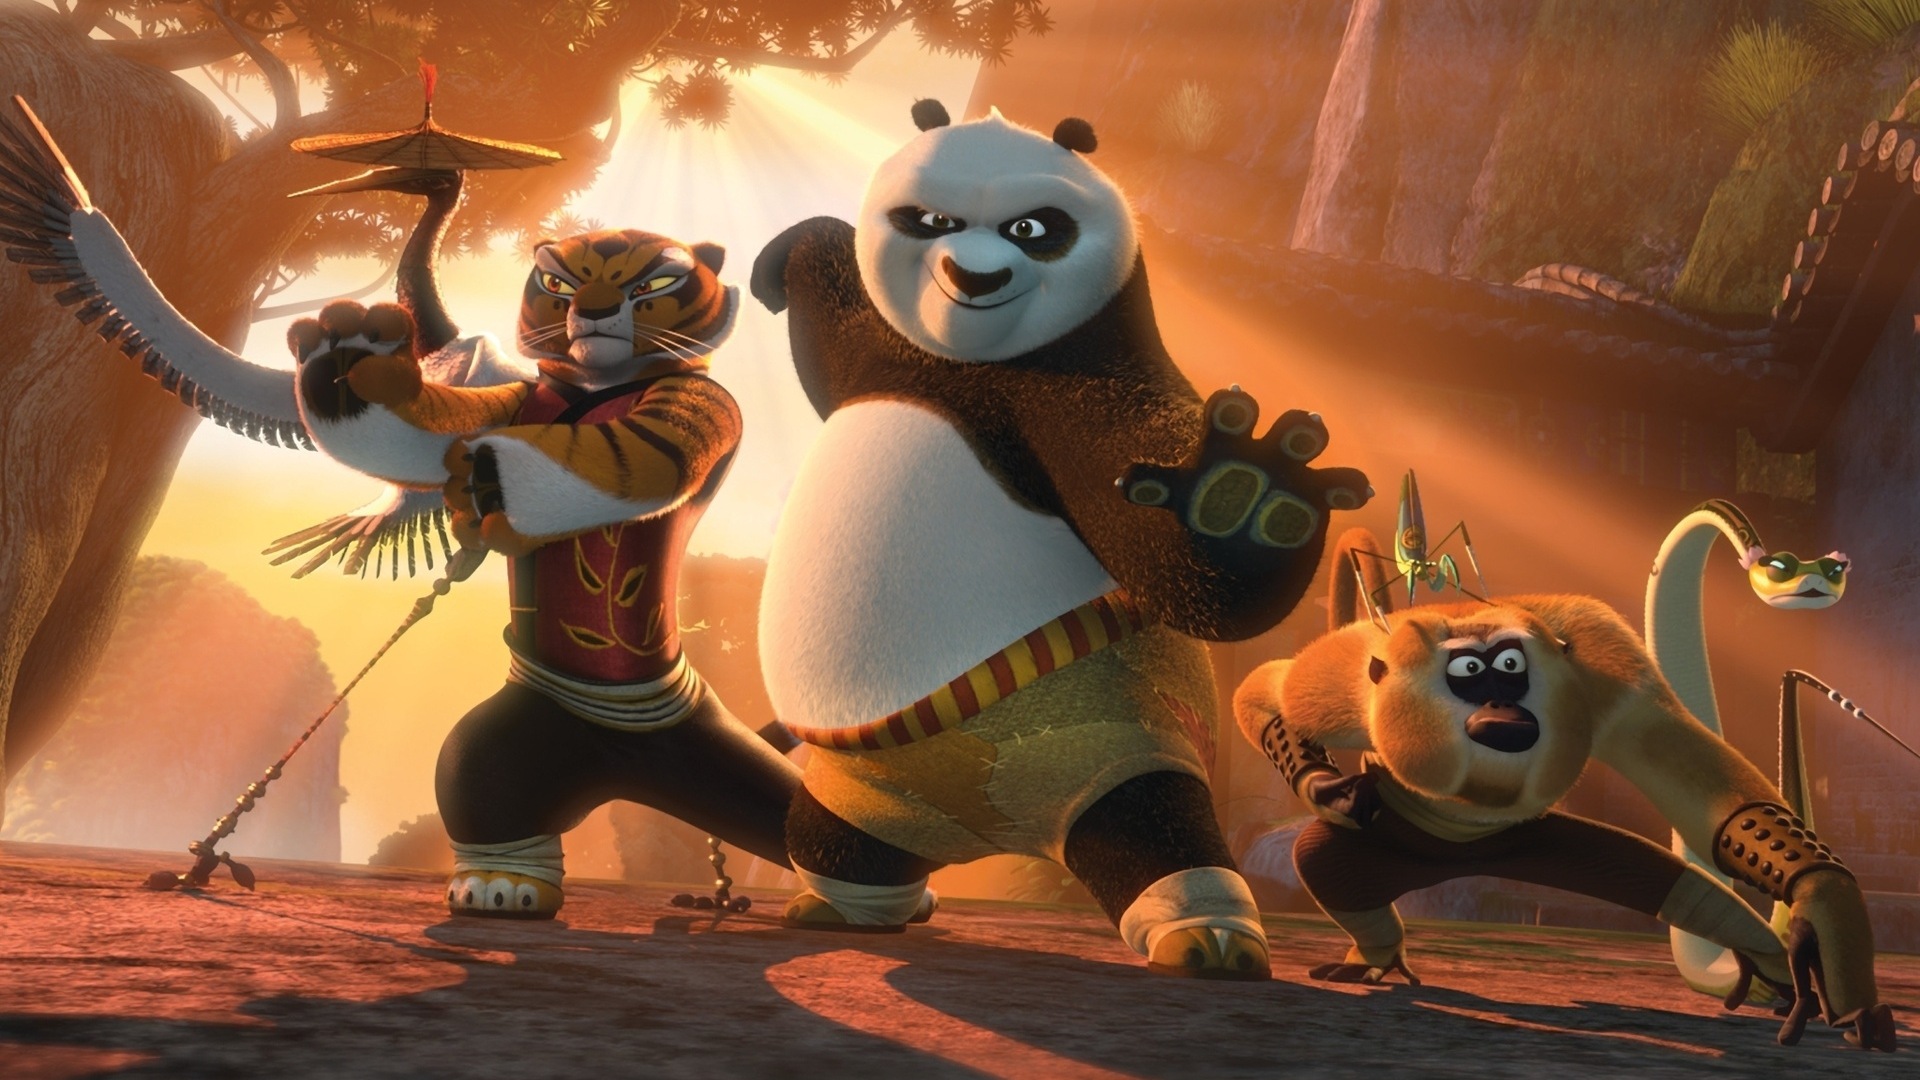 3d обои Персонажи мультфильма «Кунг-фу панда 2» / «Kung fu panda 2»: неистовая пятёрка, журавль, тигрица, обезьяна, богомол, змея на закате  мультики # 59537